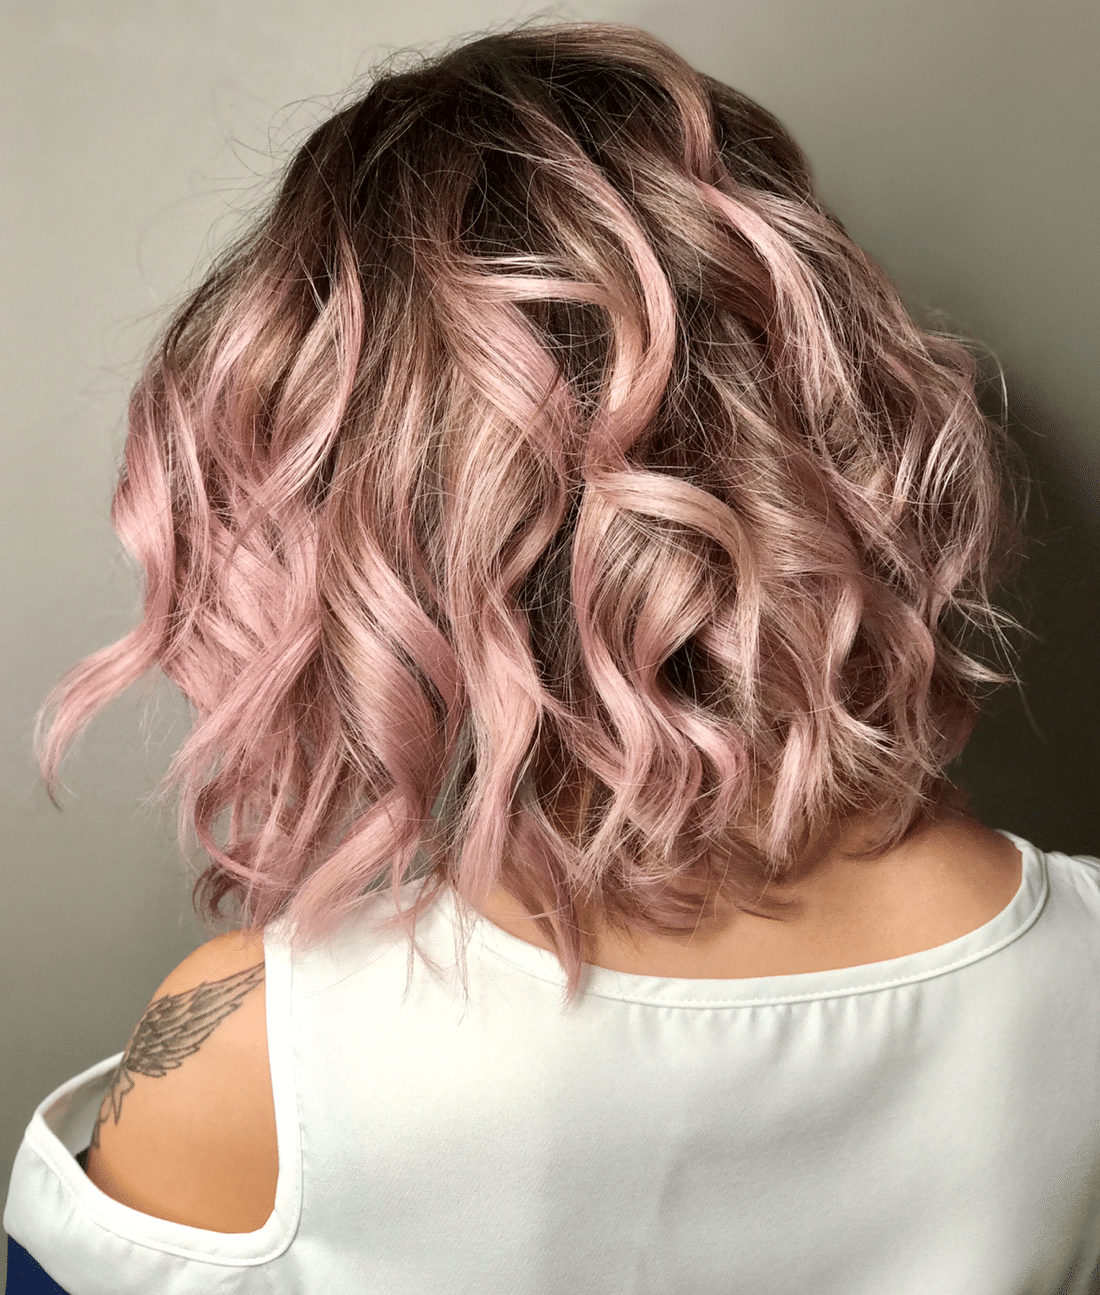 Short curly light pink hair